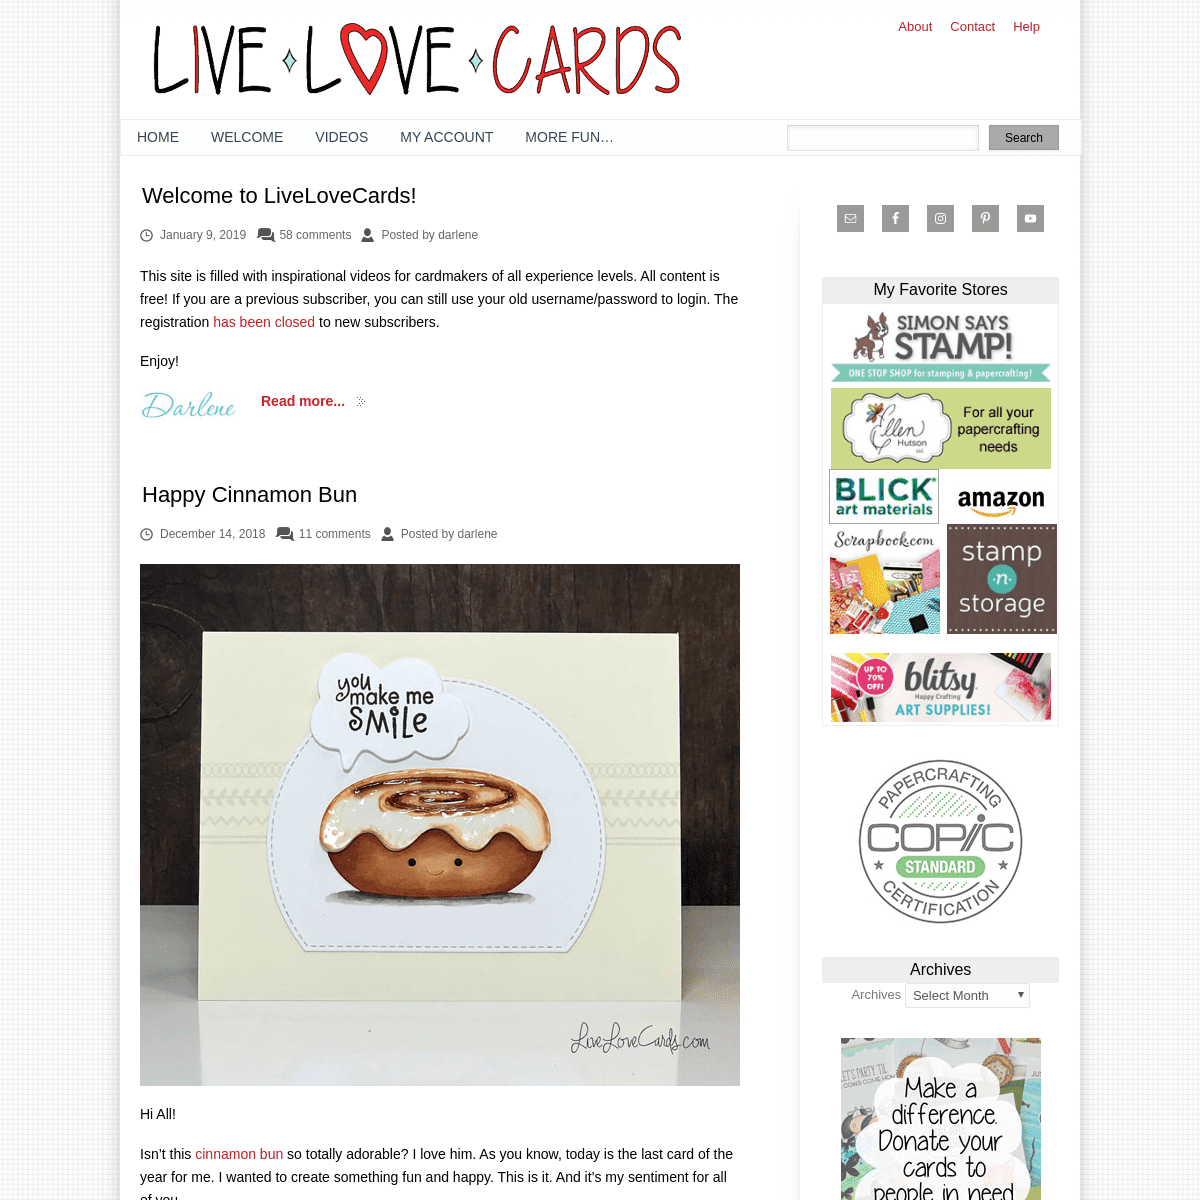 A complete backup of livelovecards.com